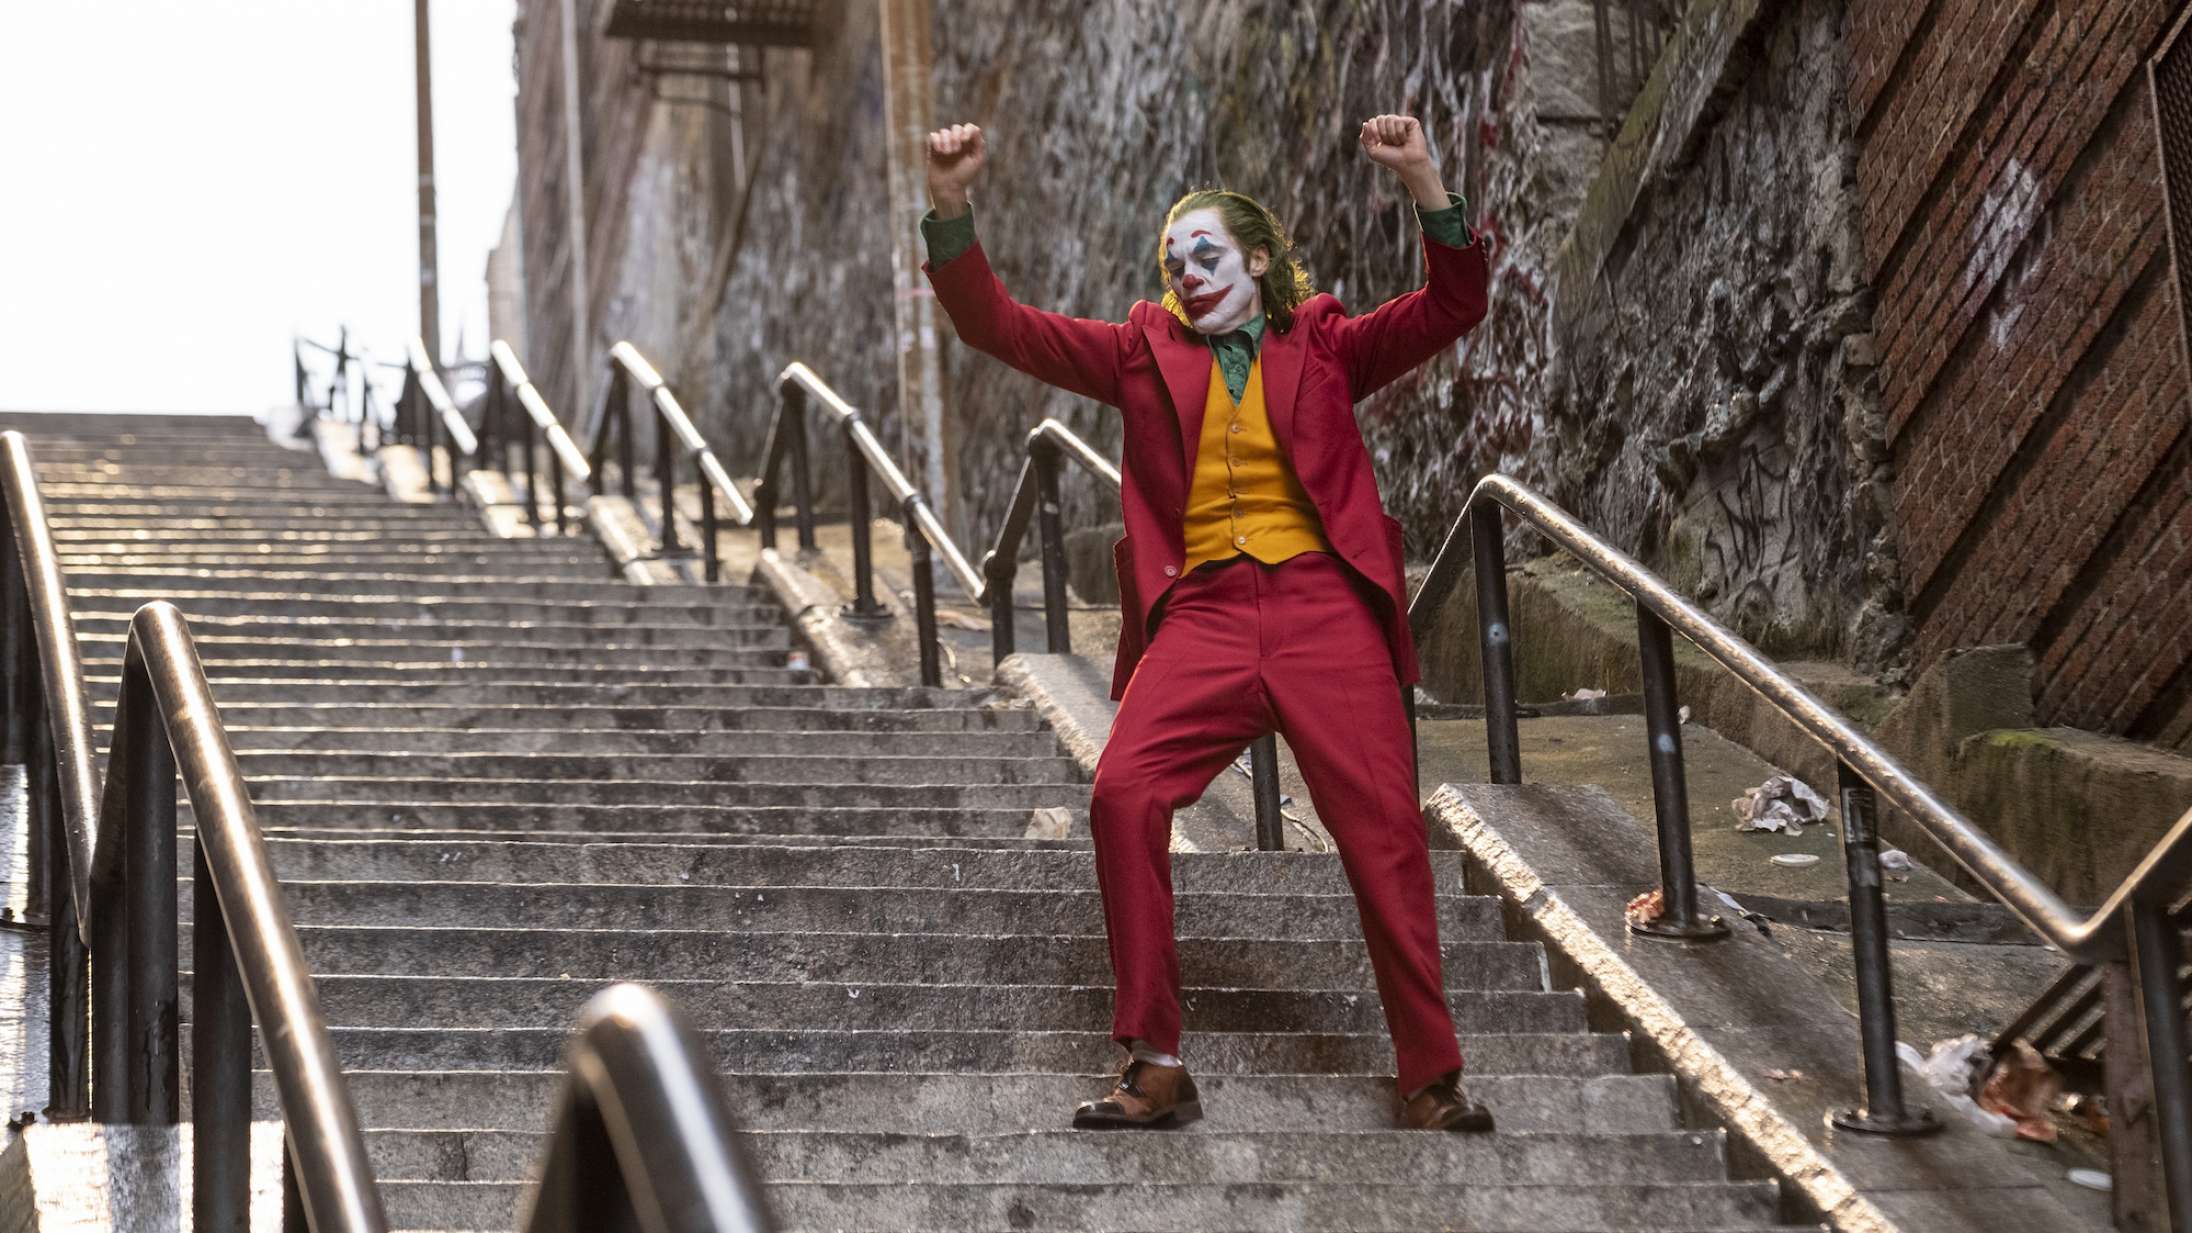 Vægttab, dans og De Niro: Sådan forberedte Joaquin Phoenix sig til rollen som Jokeren